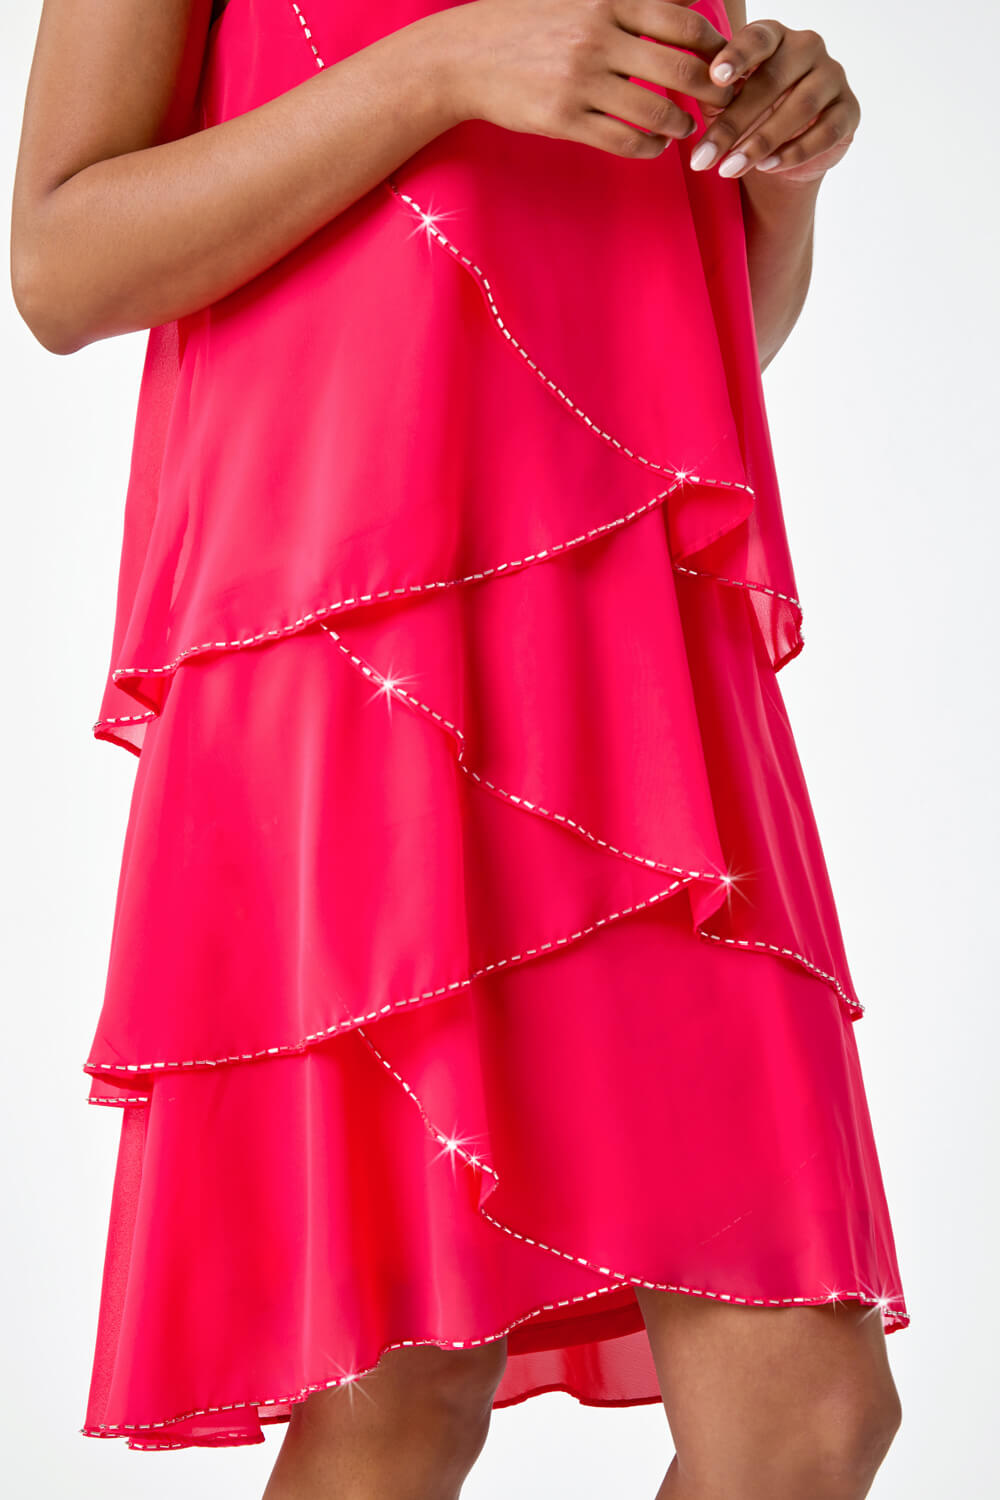 CORAL Sequin Trim Tiered Halterneck Dress, Image 5 of 5